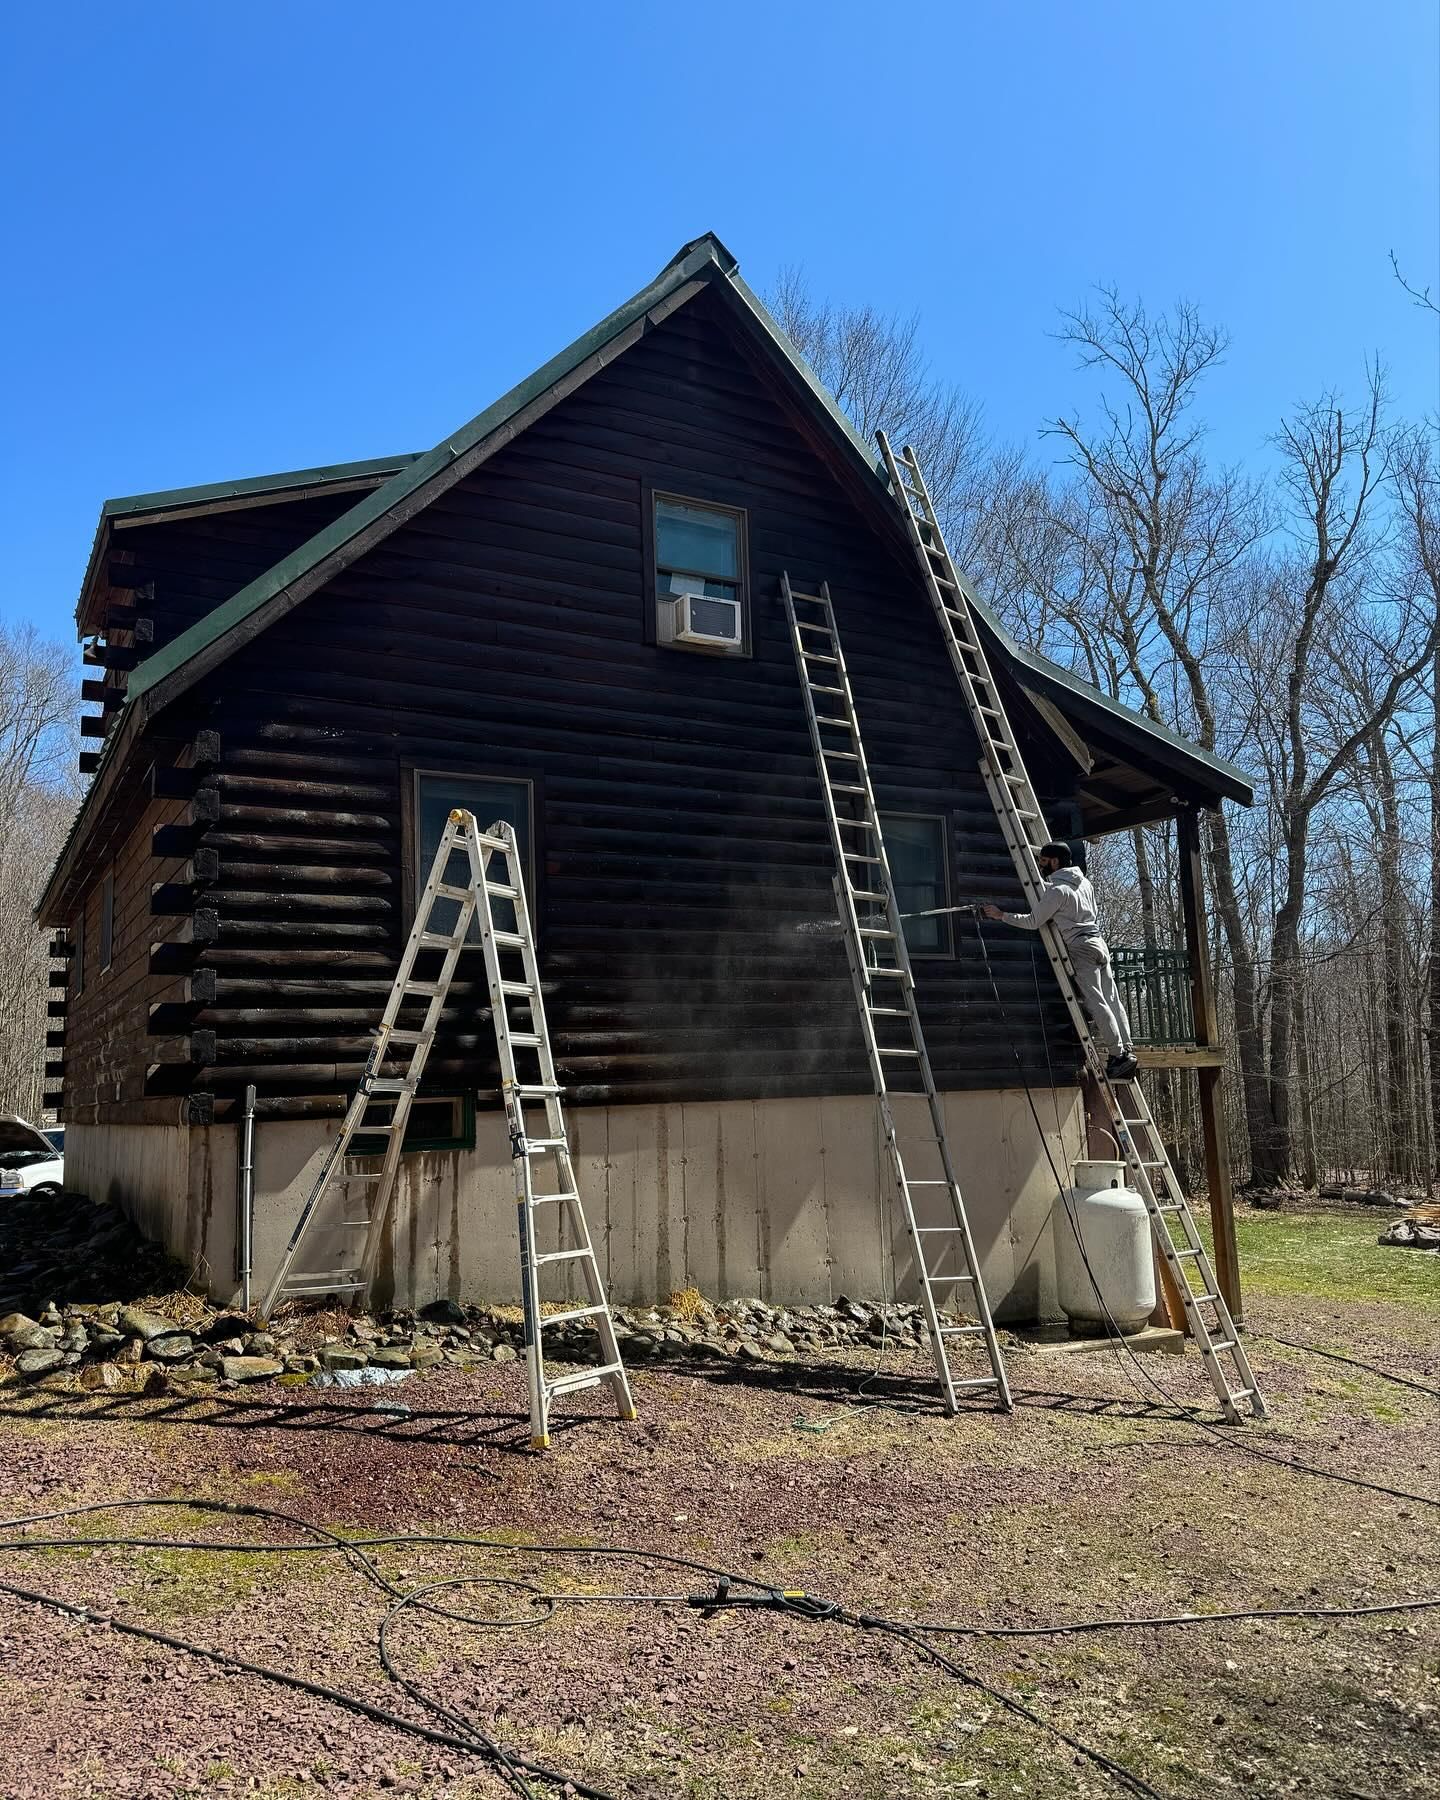  for Master Log Home Restoration in Philadelphia, PA